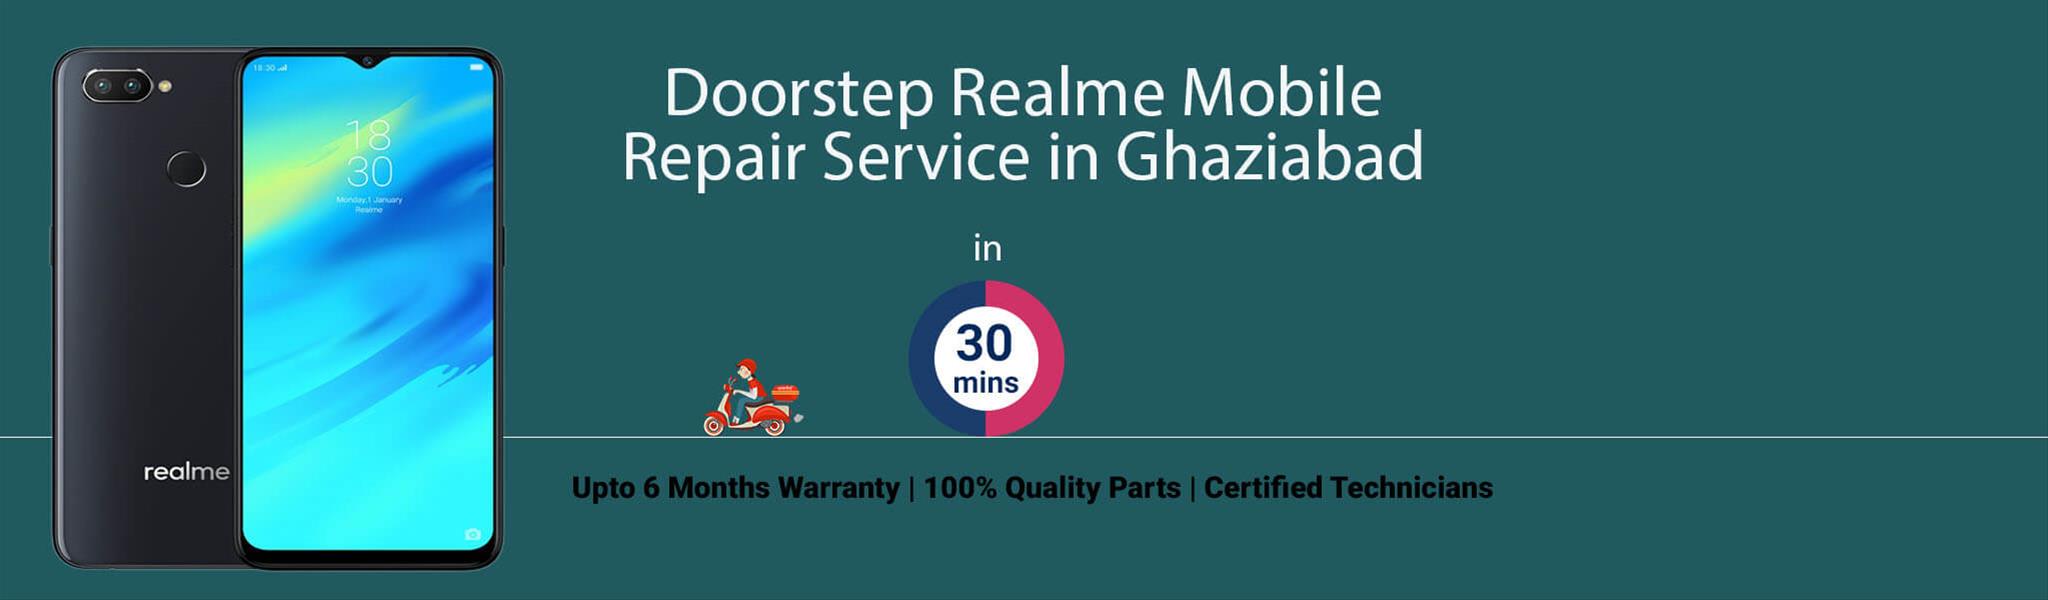 realme-repair-service-banner-ghaziabad.jpg